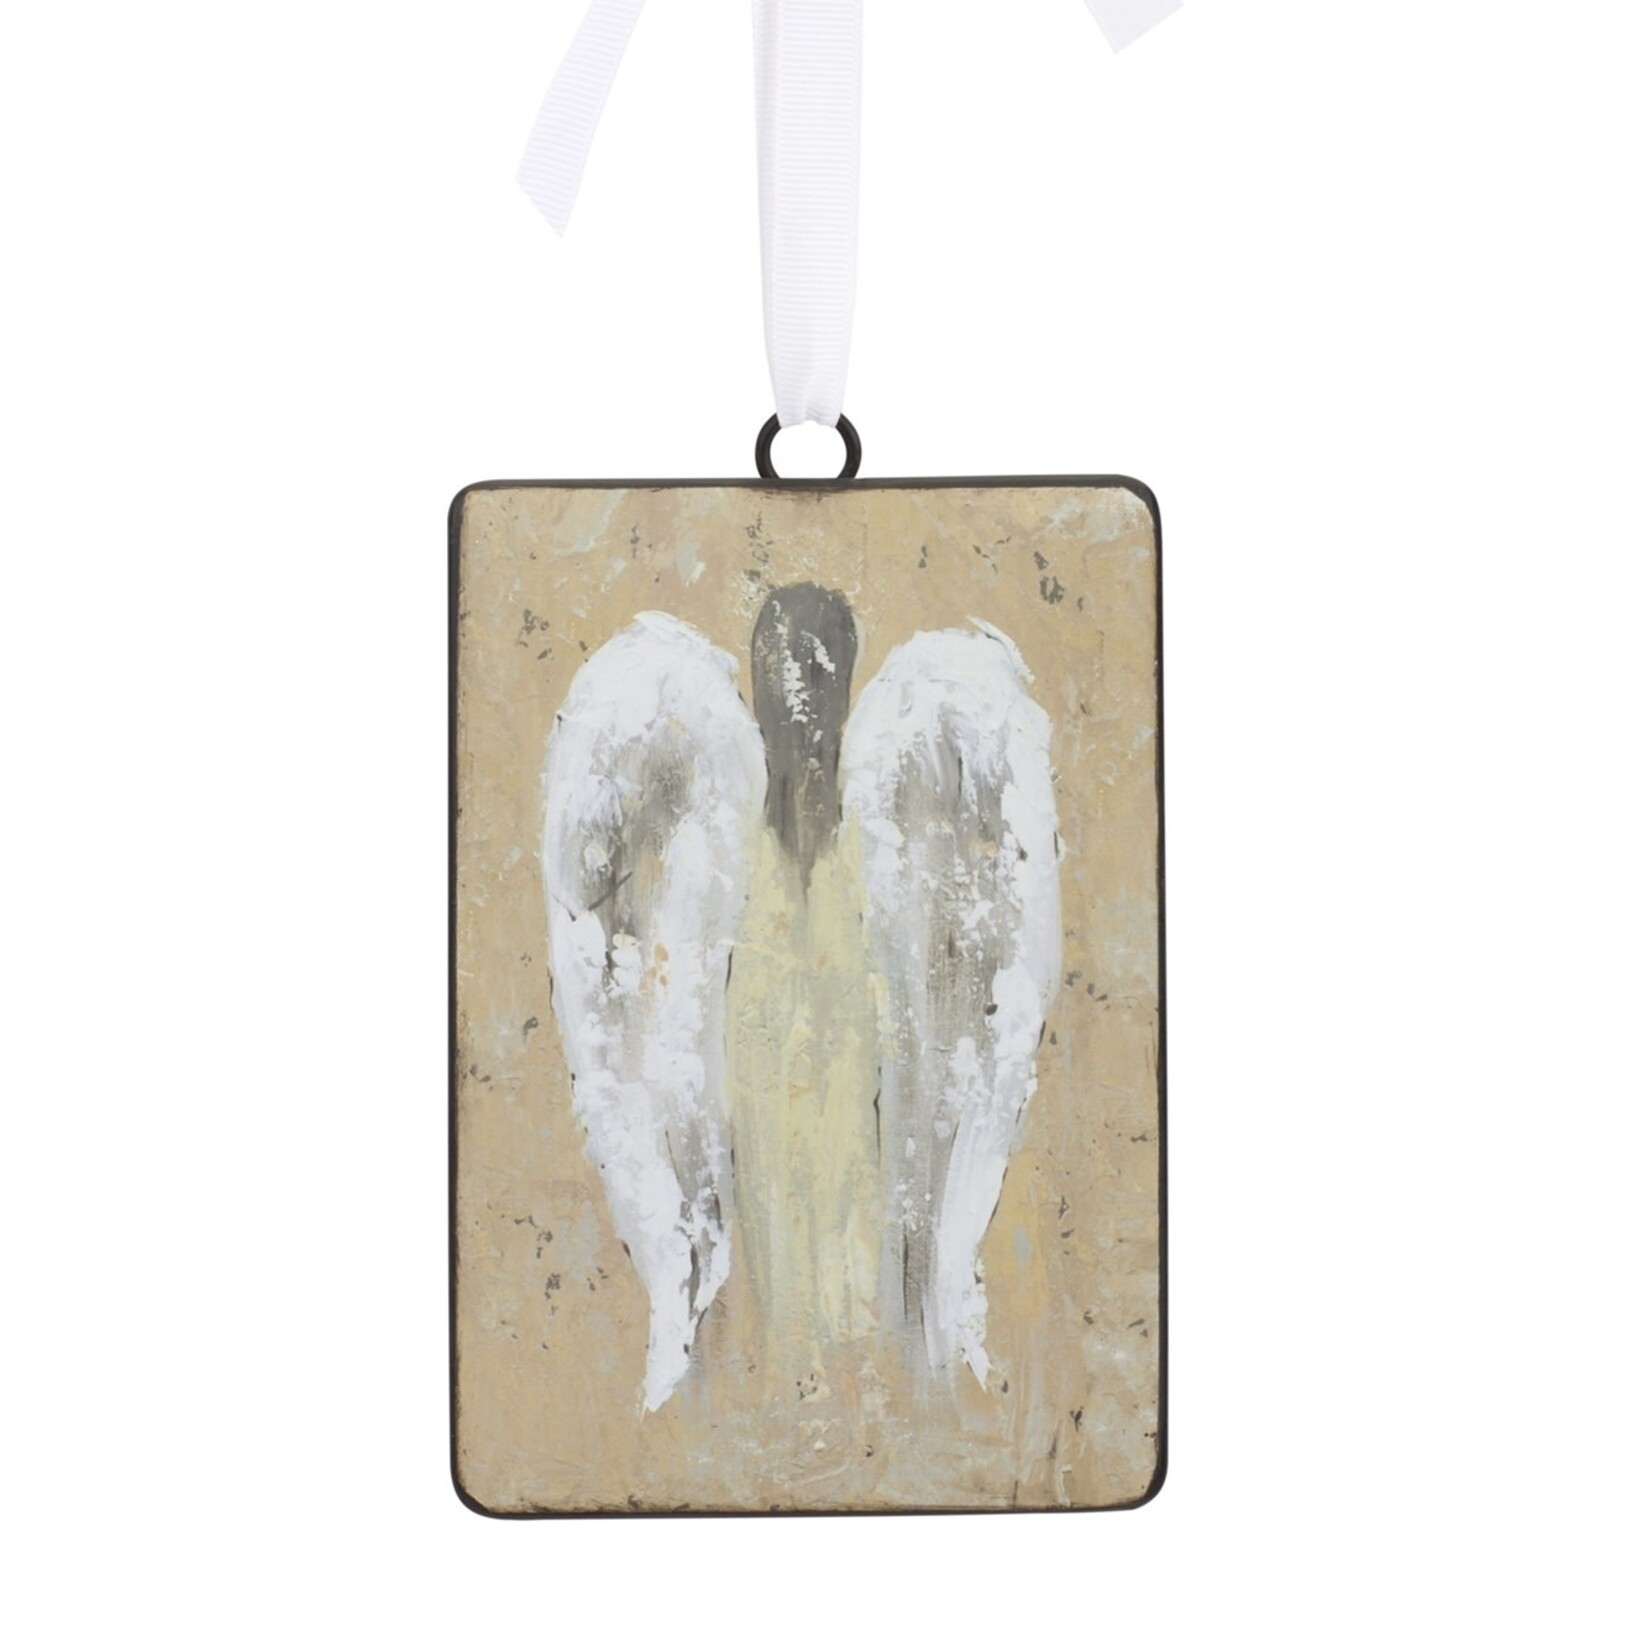 Melrose Metal Angel Ornament